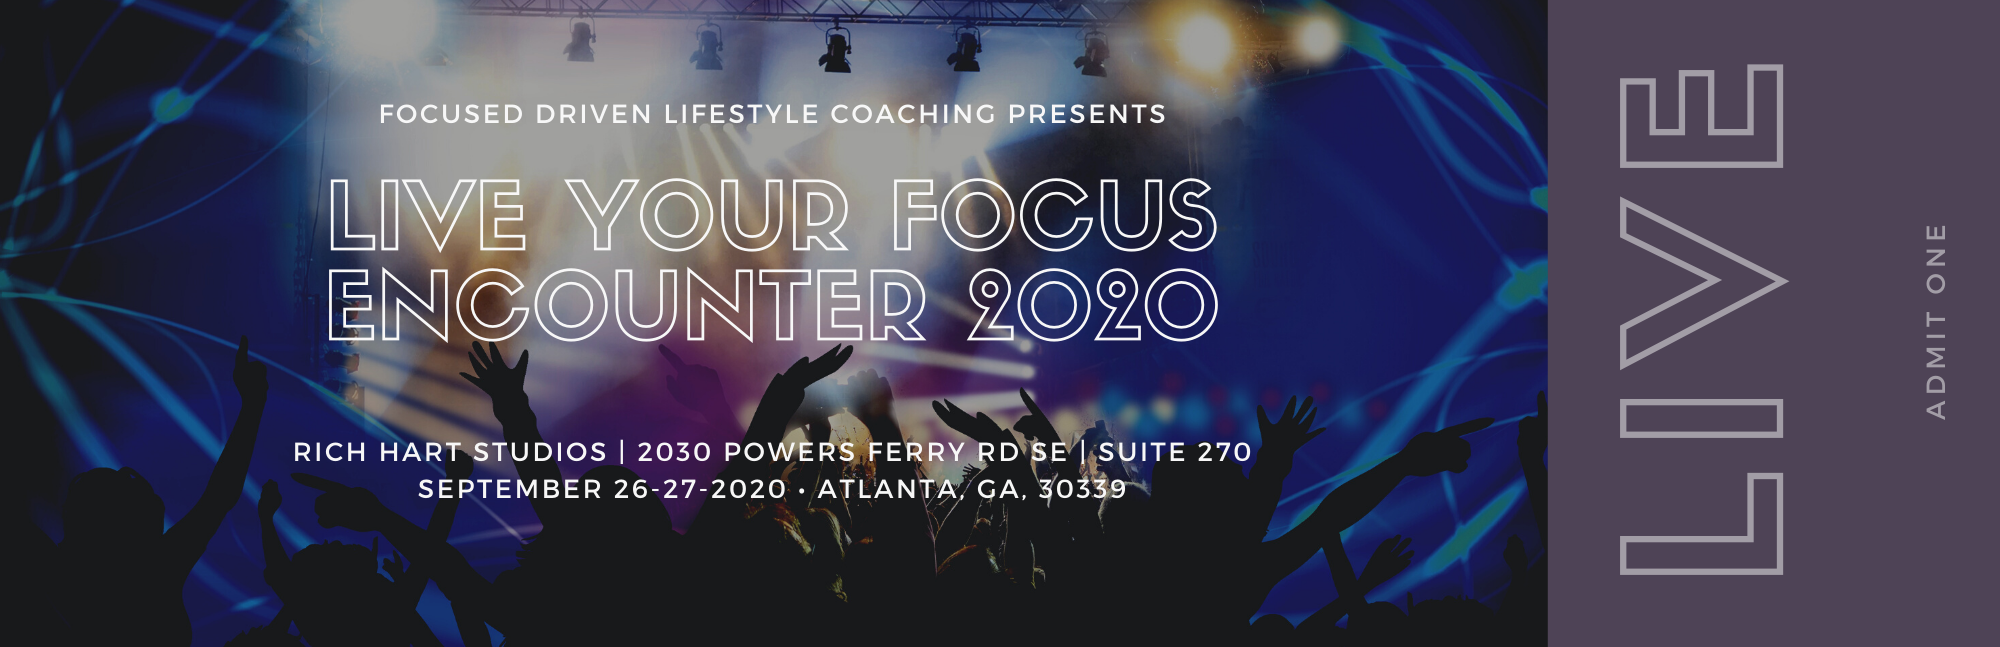 Live Your Focus Encounter 2020 Virtual Summit